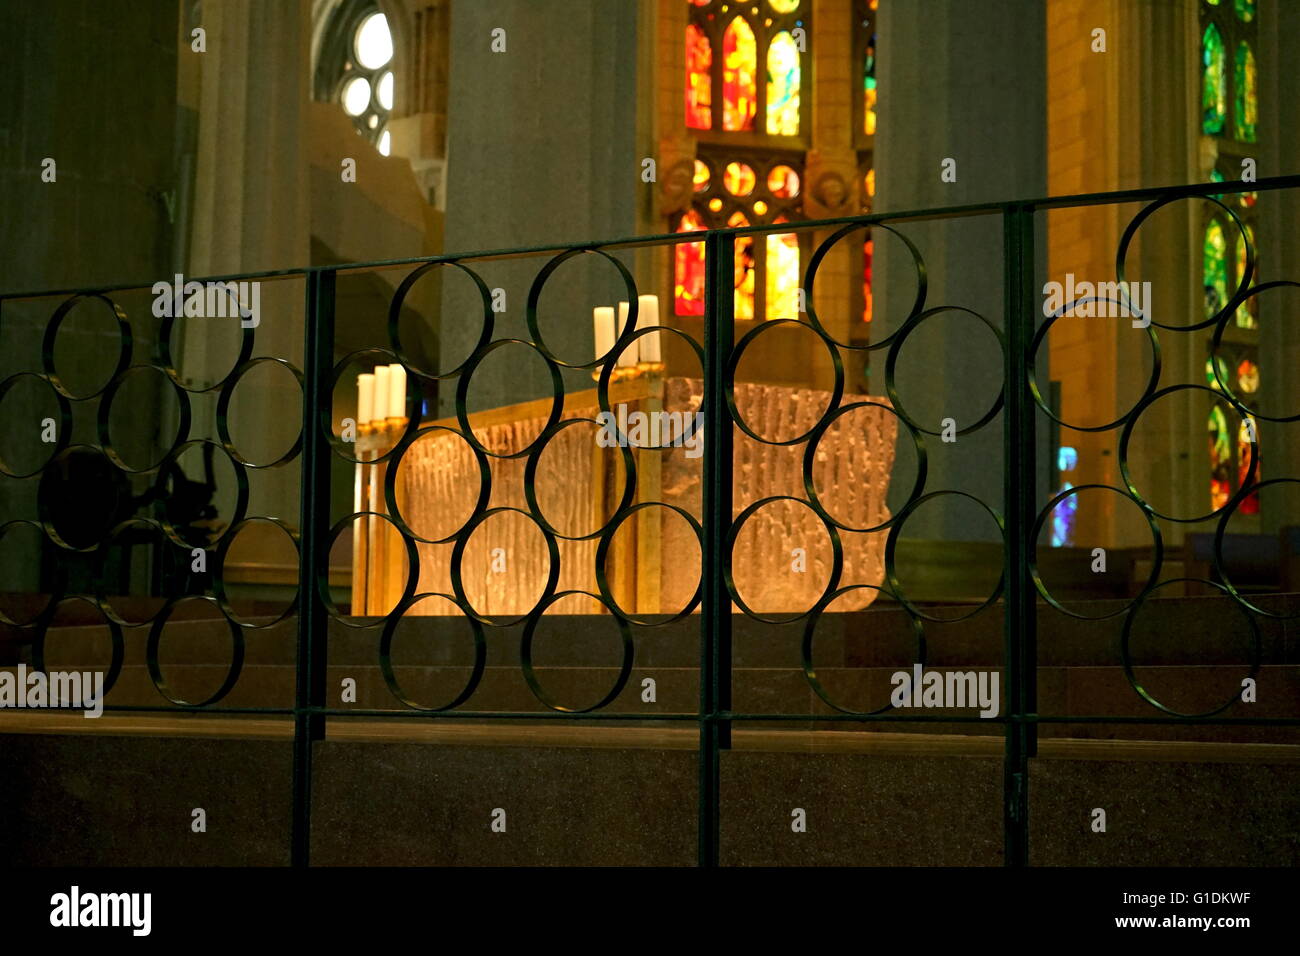 View of the glass altar within the Basílica i Temple Expiatori de la Sagrada Família, a Roman Catholic church in Barcelona, designed by Spanish architect Antoni Gaudí (1852–1926). Dated 21st Century Stock Photo